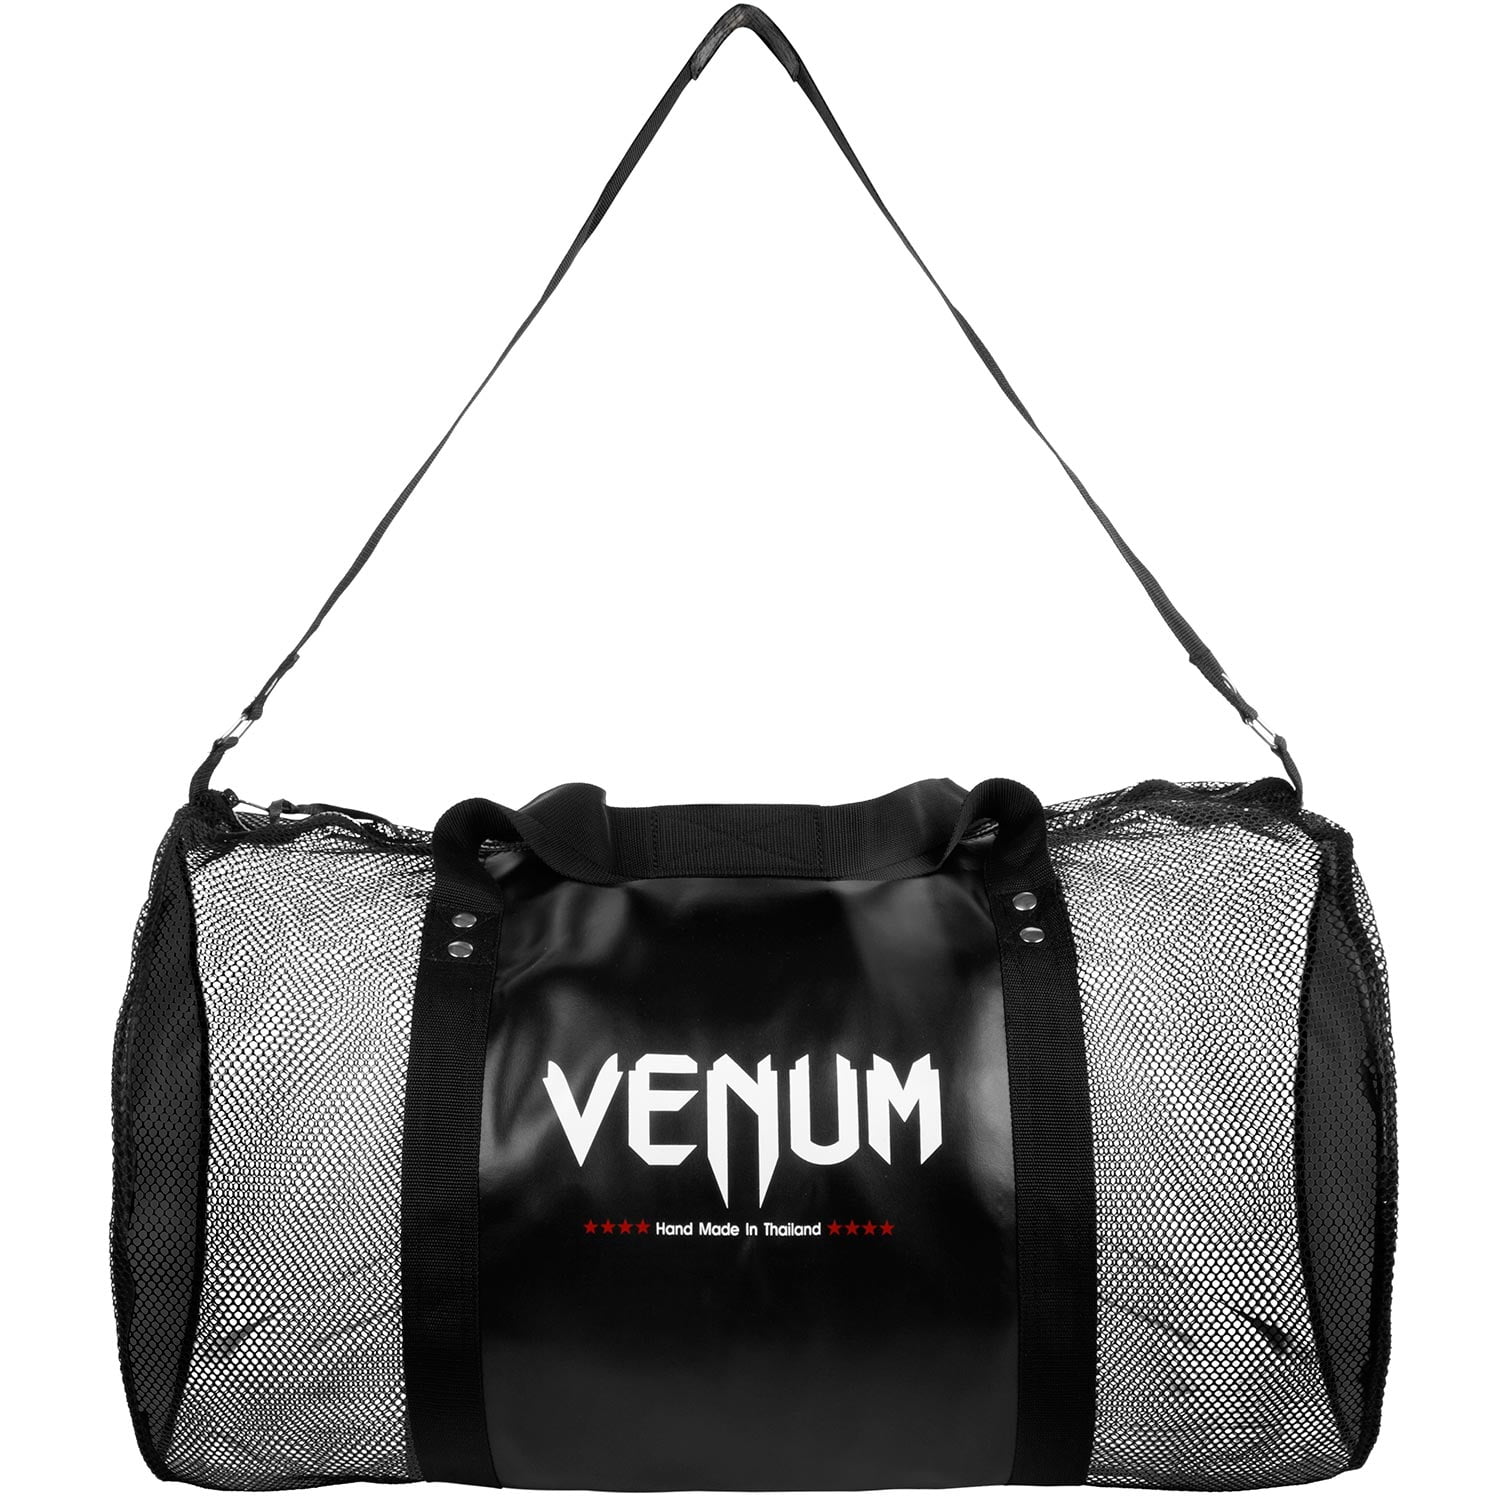 Venum Thai Camp Sports Bag - Walmart.com